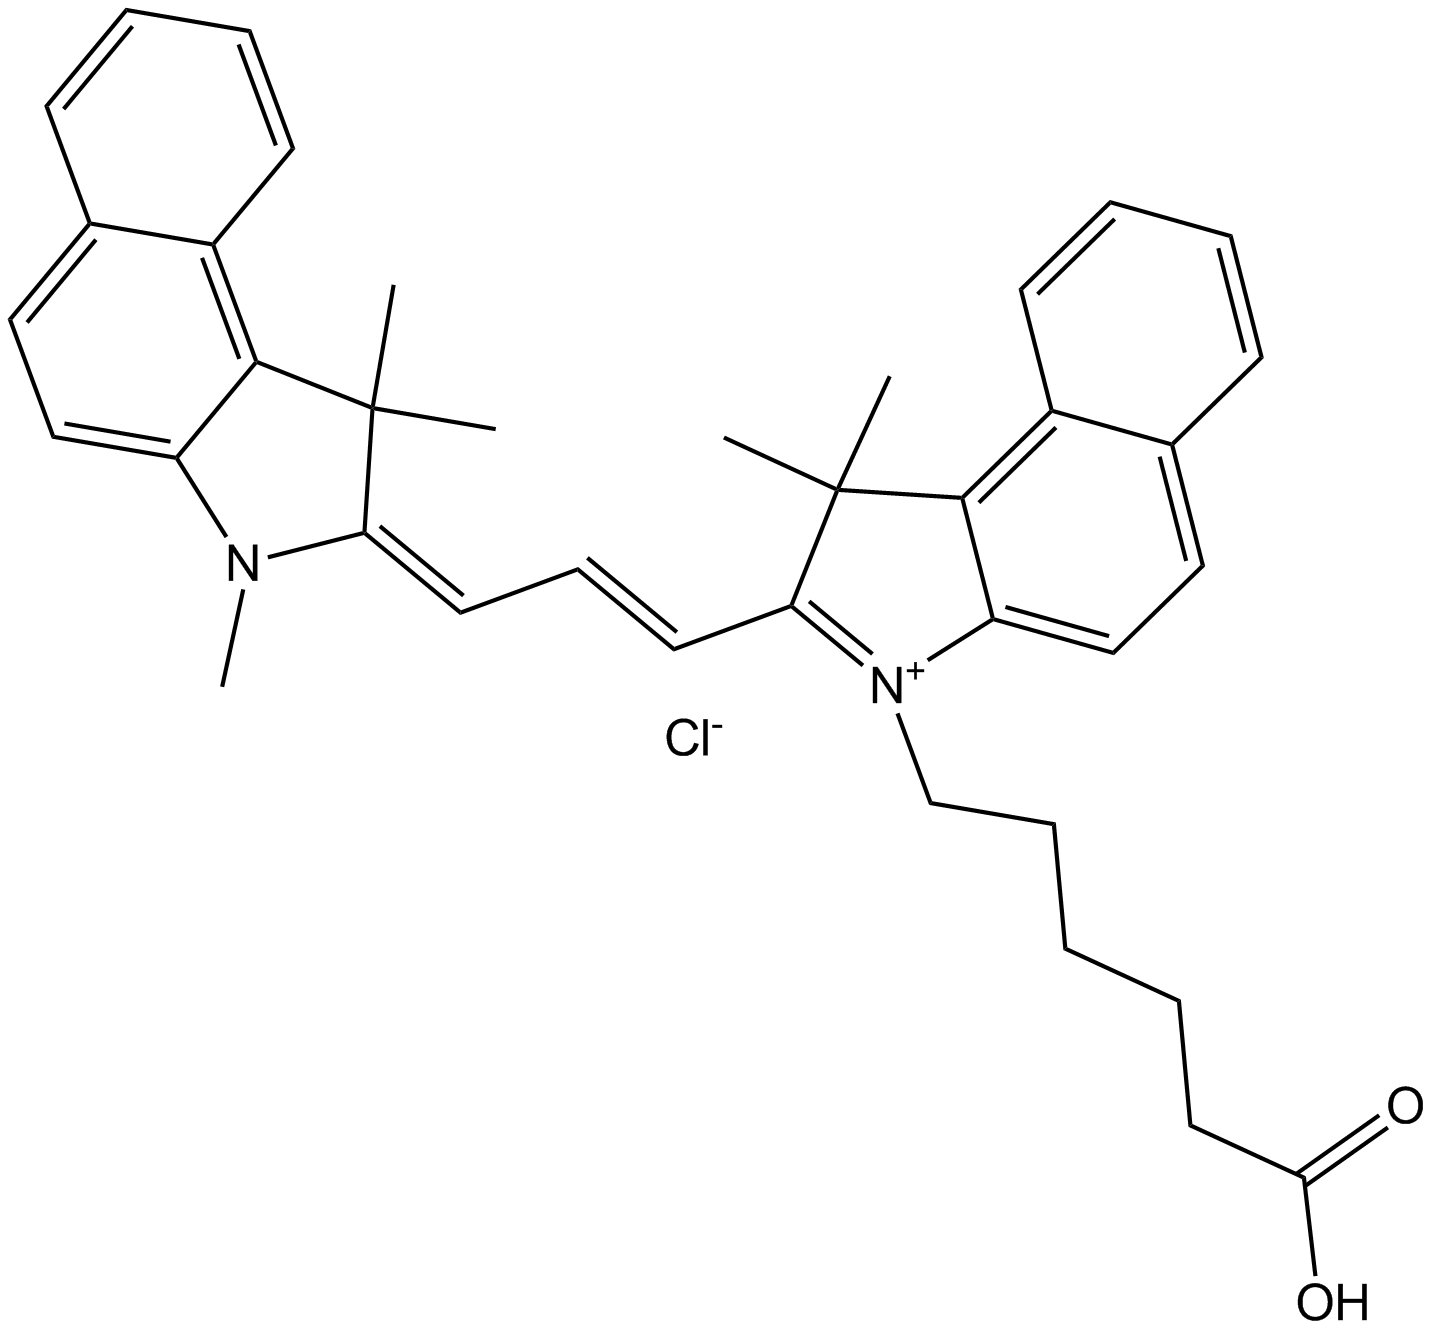 Cyanine3.5 carboxylic acid